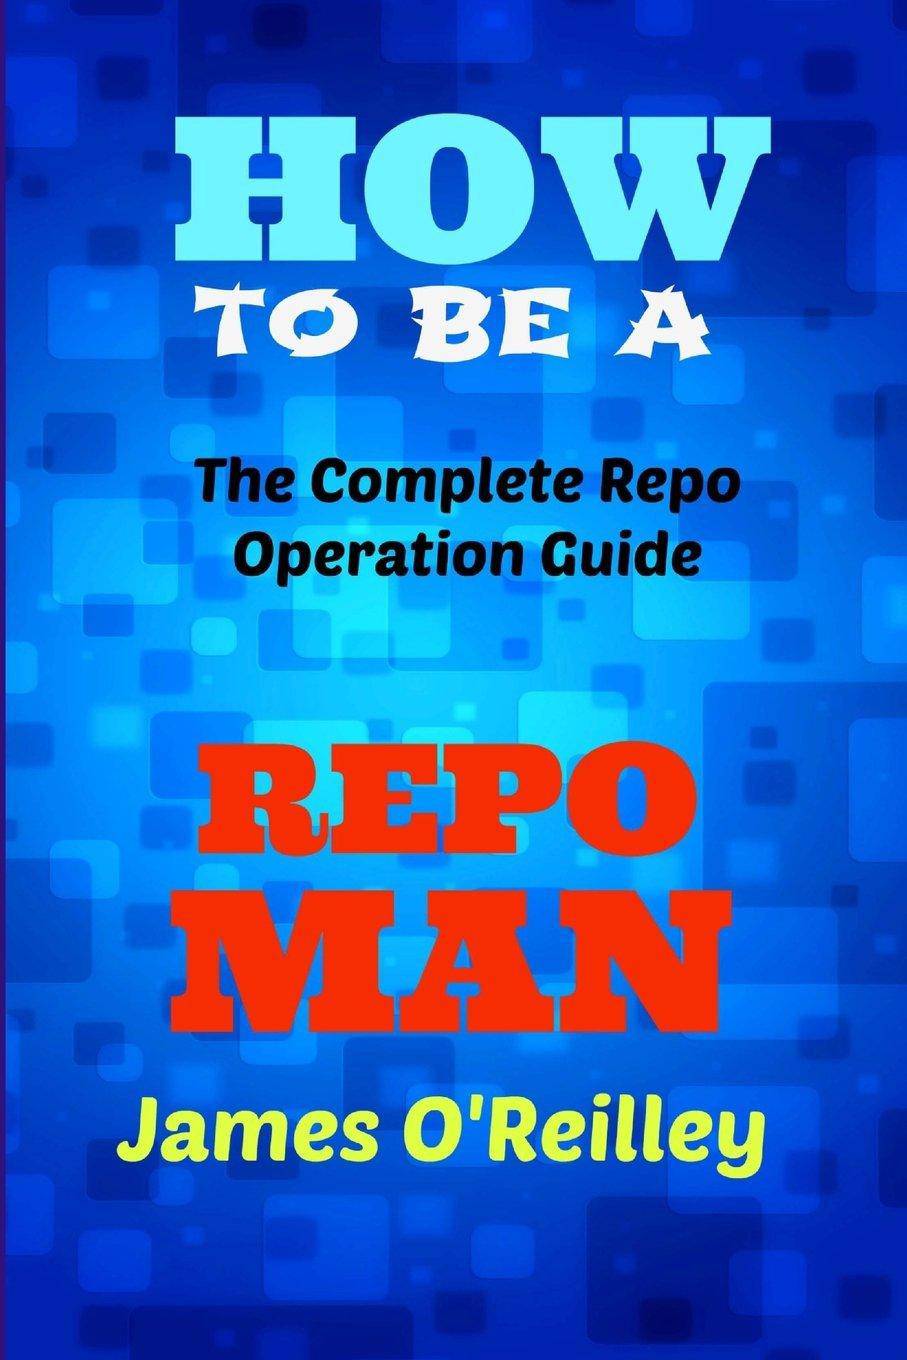 How to be a Repo Man - SureShot Books Publishing LLC